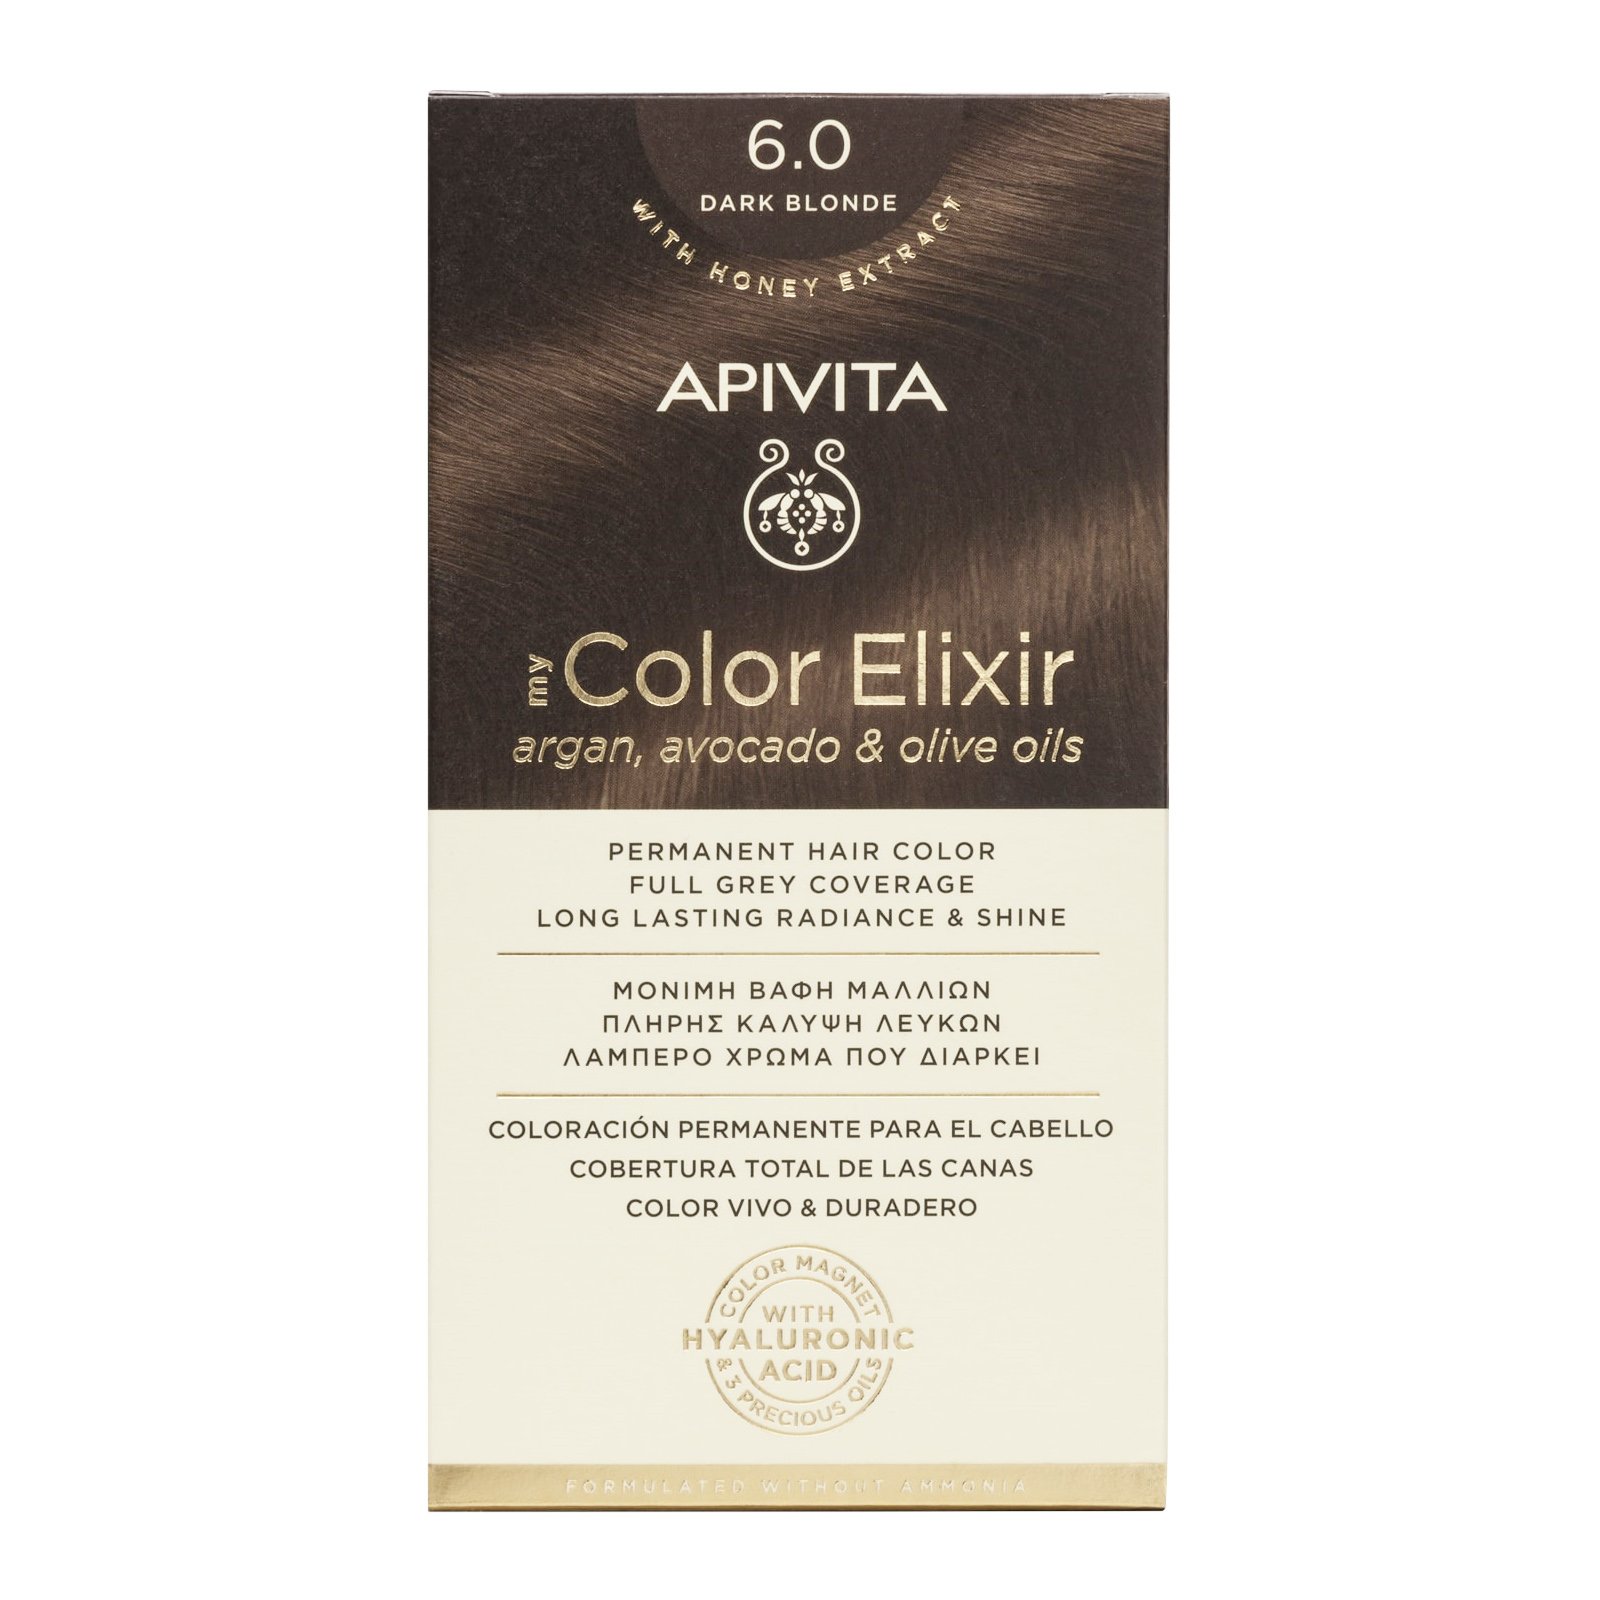 Apivita My Color Elixir Μόνιμη Βαφή Μαλλιών με Καινοτόμο Σύστημα Color Magnet που Σταθεροποιεί και Σφραγίζει το Χρώμα στην Τρίχα – N6.0 ΞΑΝΘΟ ΣΚΟΥΡΟ